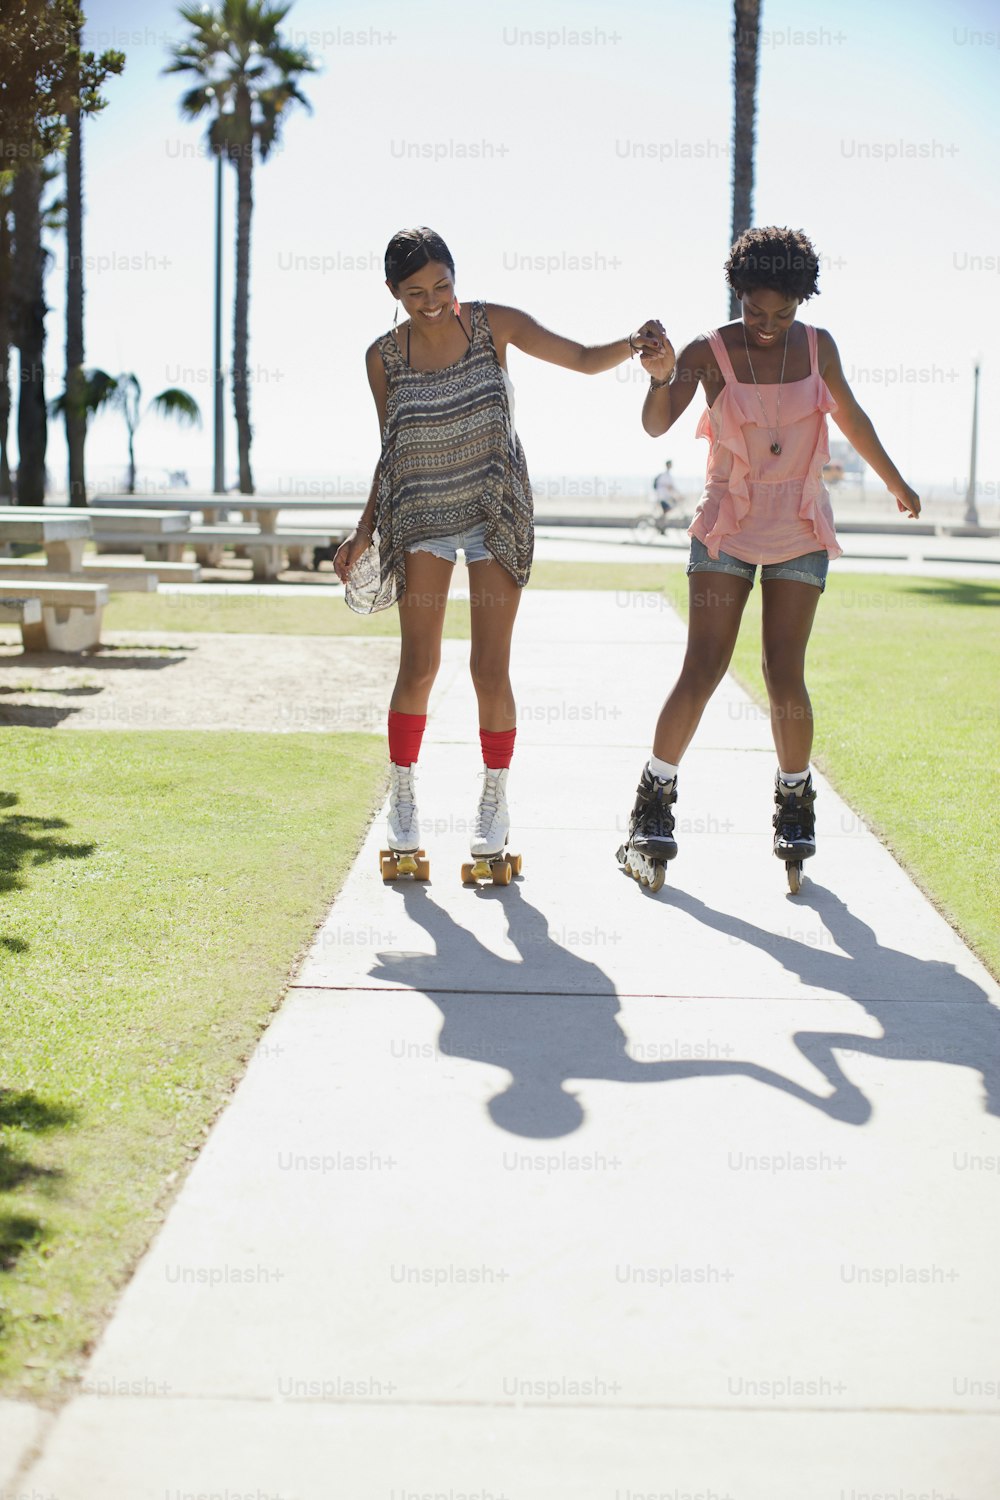 two women rollerblading down a sidewalk near palm trees